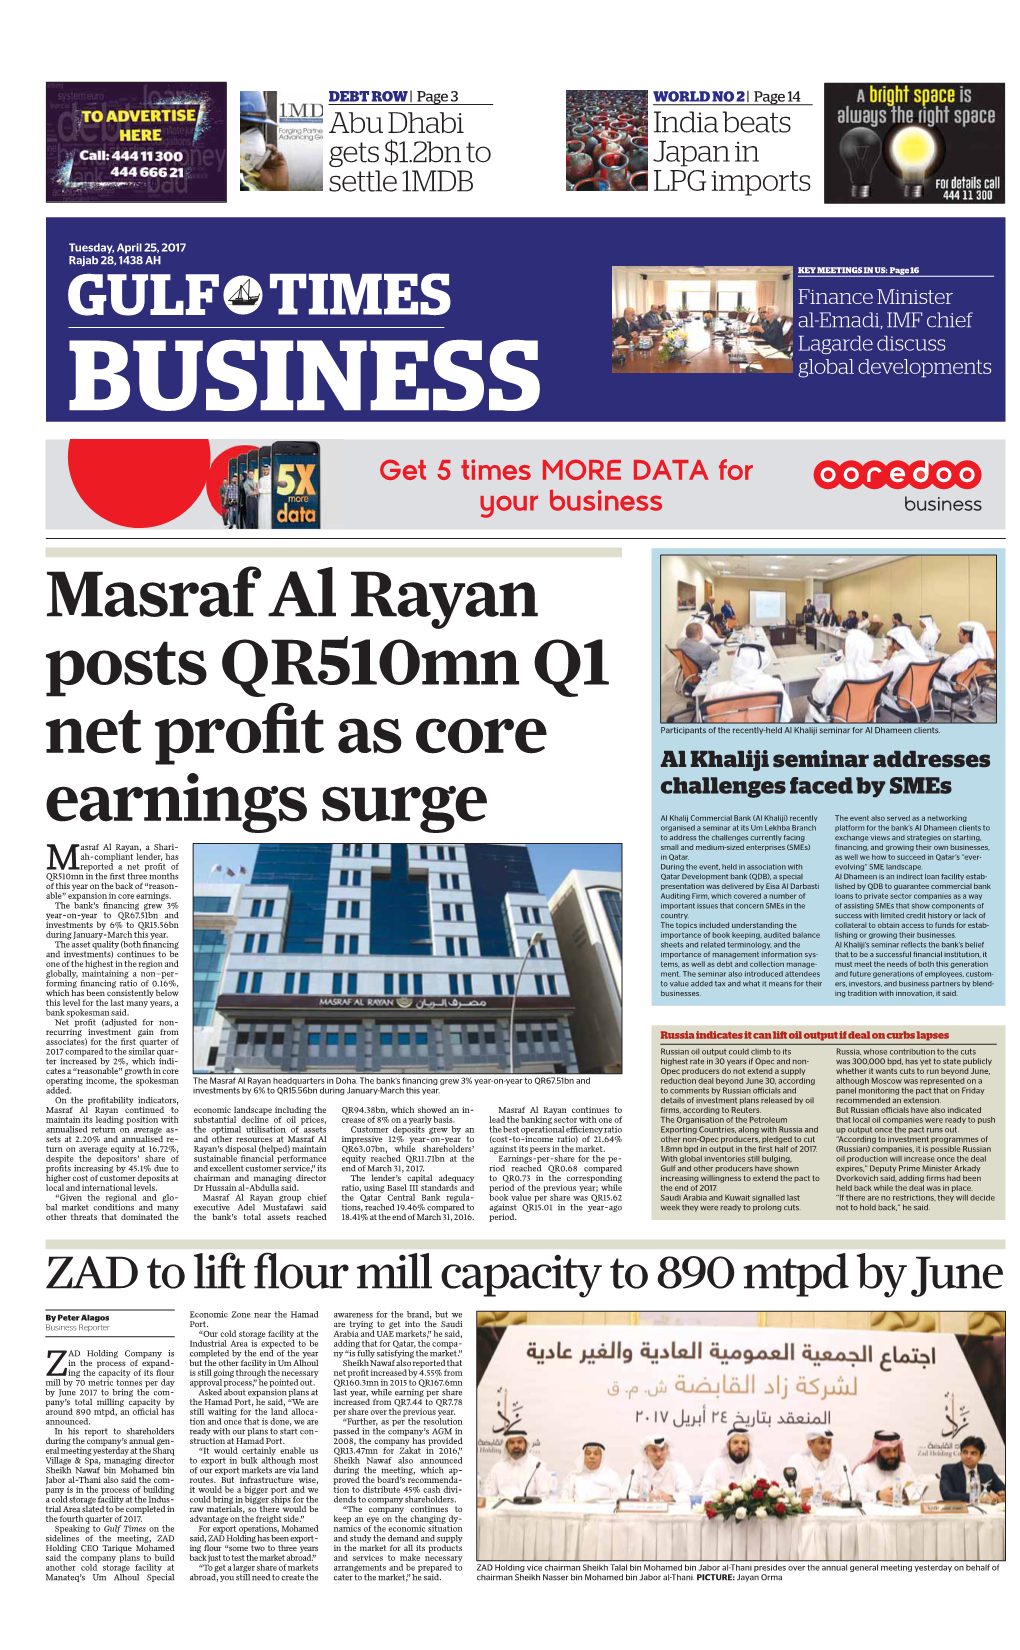 Masraf Al Rayan Posts Qr510mn Q1 Net Profit As Core Earnings Surge